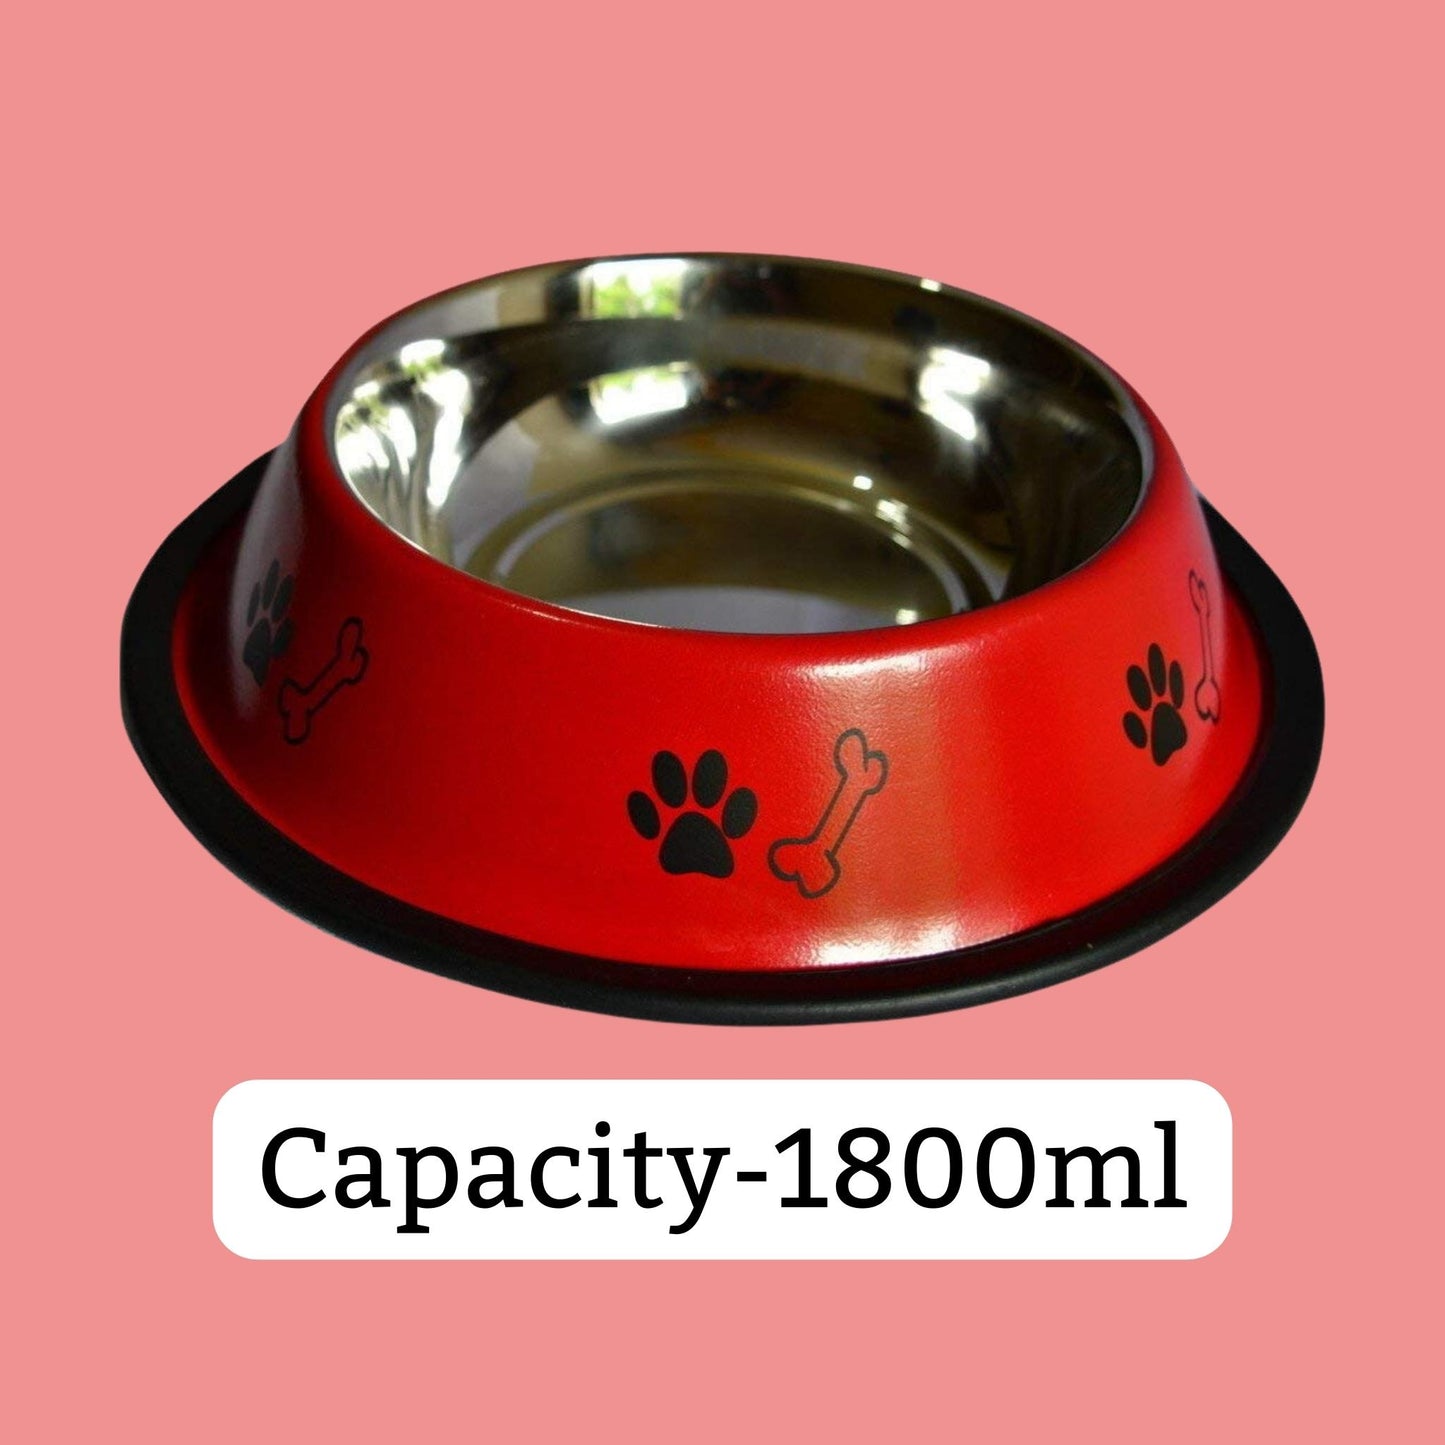 Foodie Puppies Printed Steel Bowl for Pets - 1800ml (Red), Pack of 2